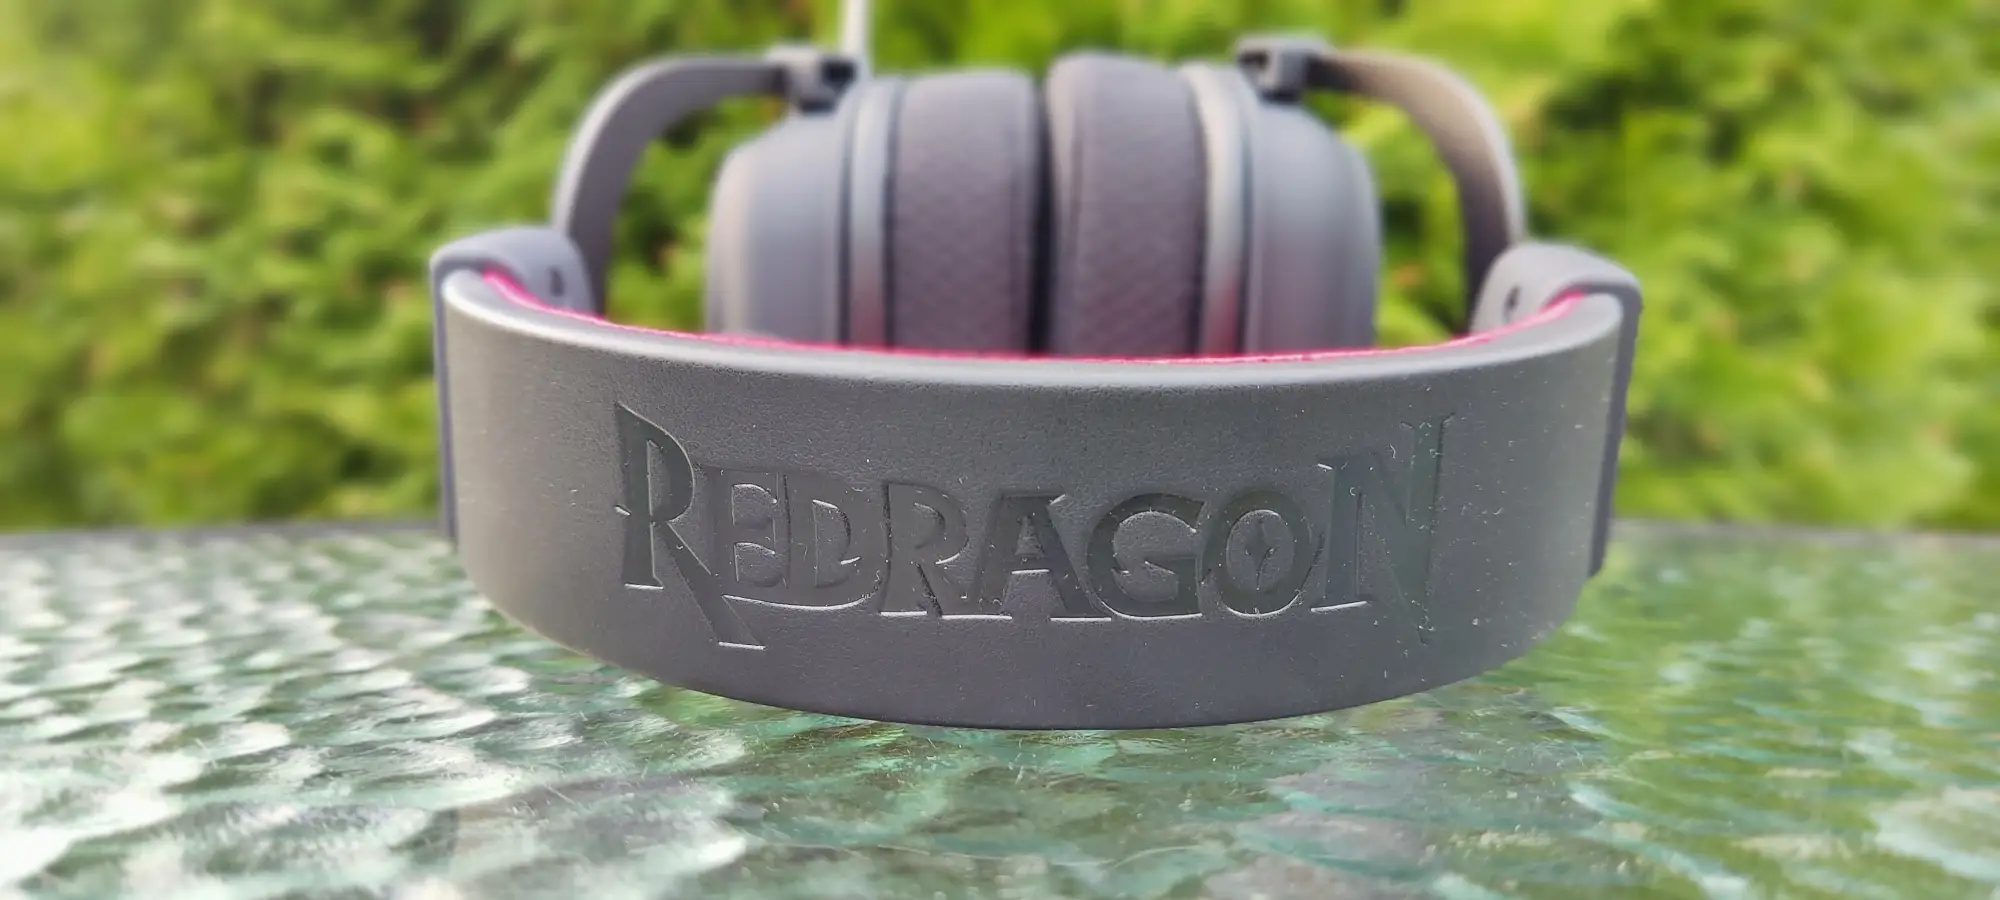 Logo Redragon na pałąku słuchawek.